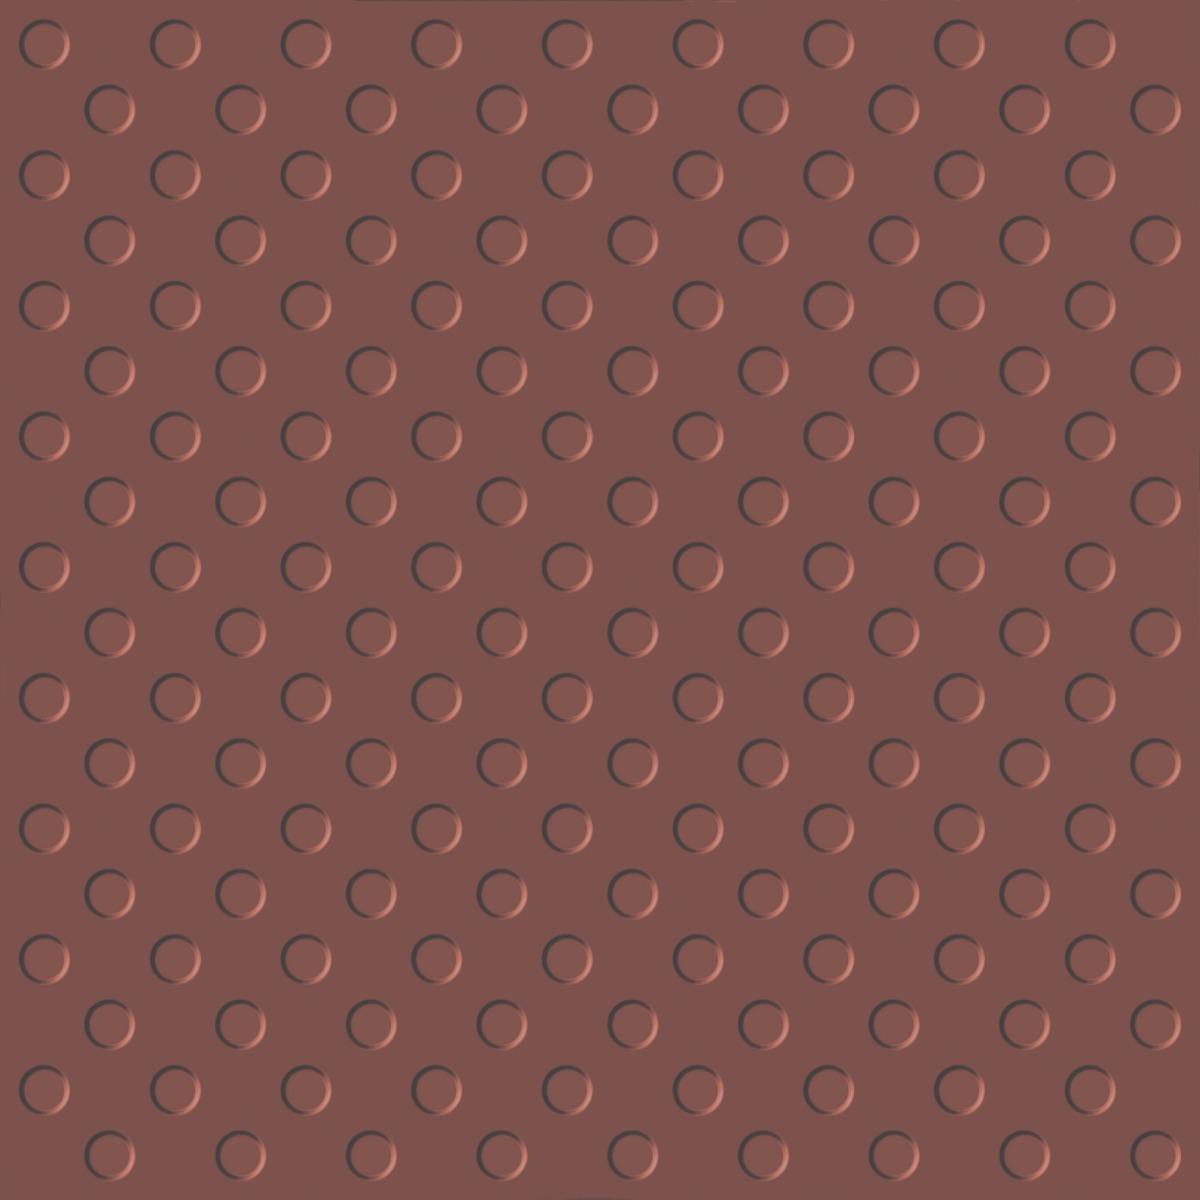 Terracotta Tiles for Commercial Tiles, Parking Tiles, Office Tiles, Pathway Tiles, Hospital Tiles, High Traffic Tiles, Bar/Restaurant, Outdoor Area, Porch/Parking